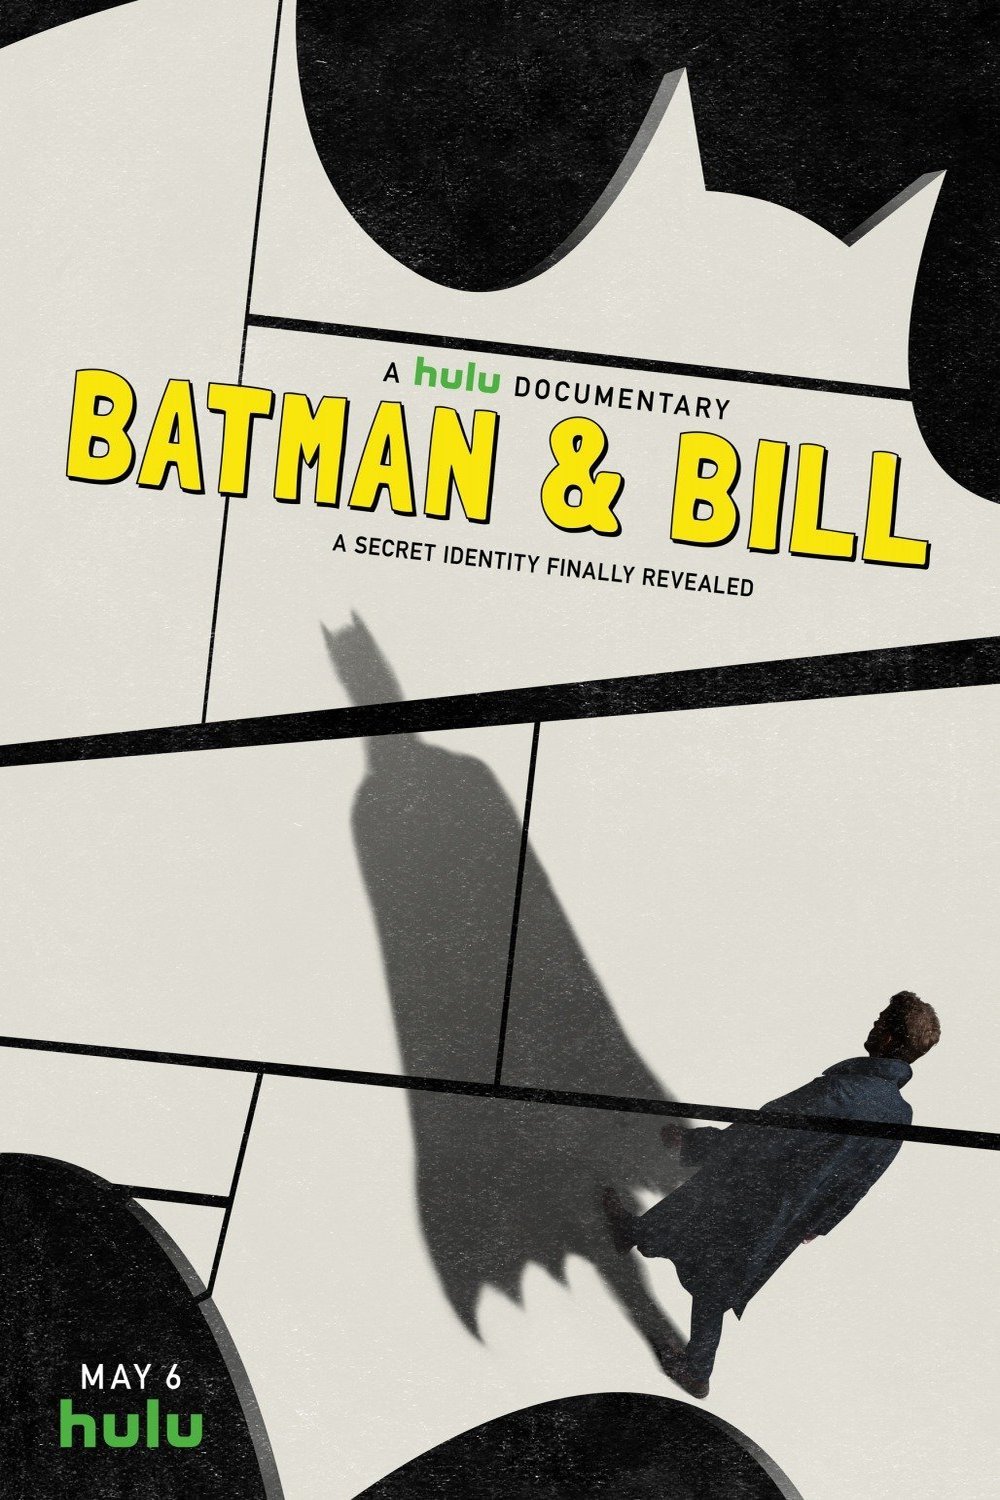 Poster of the movie Batman & Bill